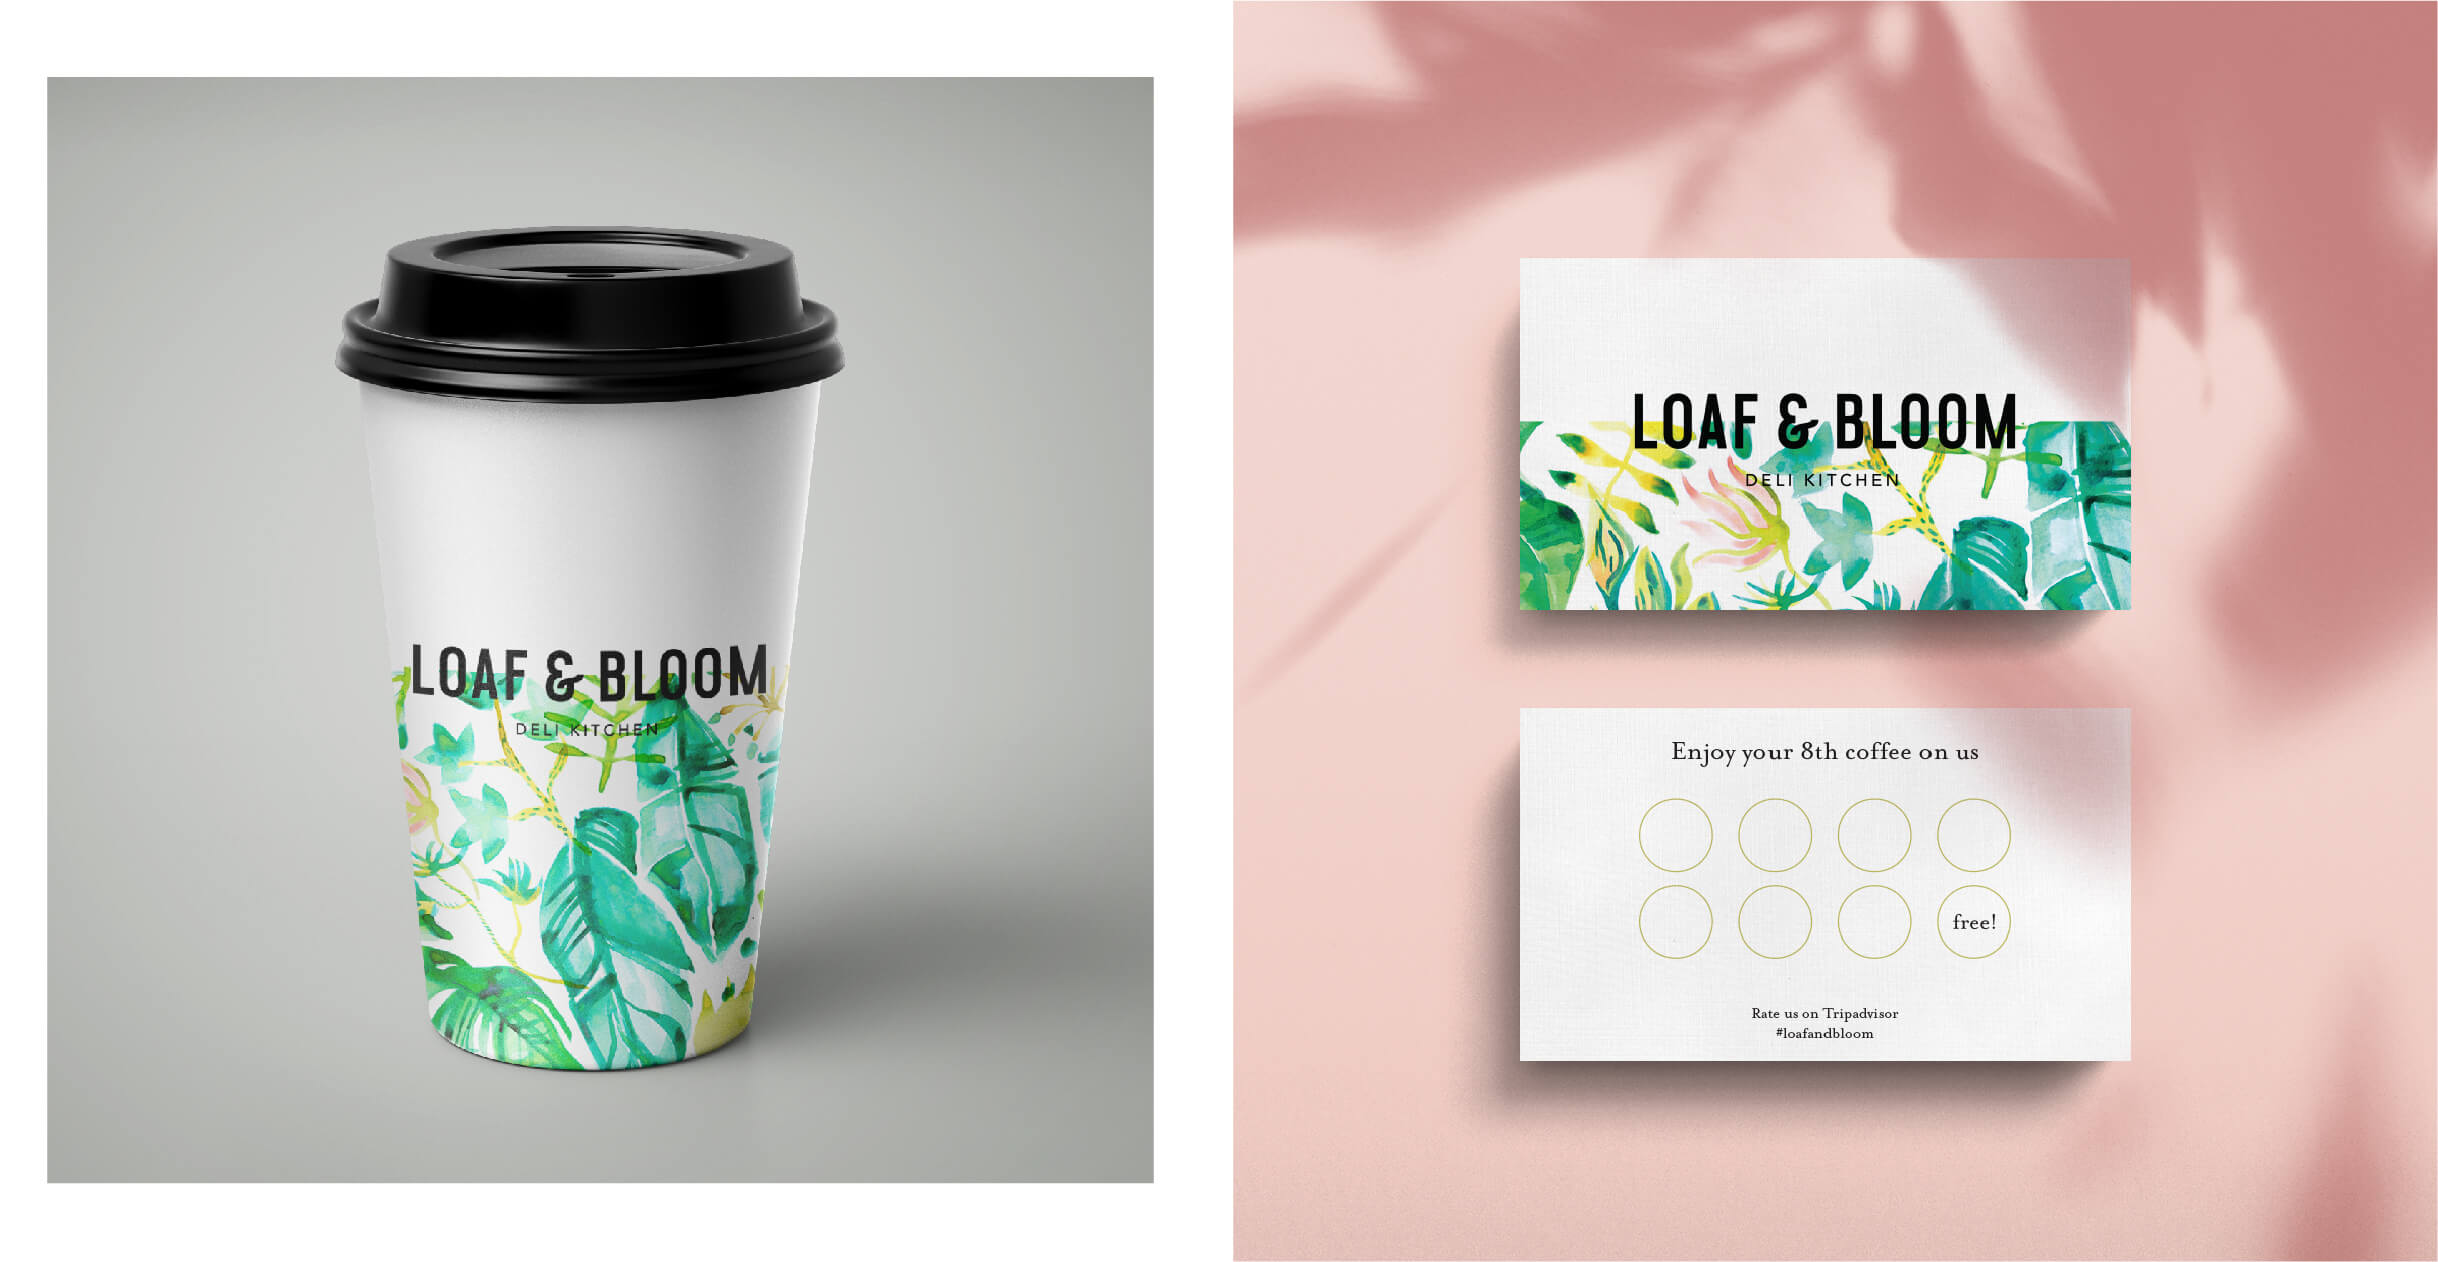 Debenhams Loaf & Bloom coffee cup and loyalty card